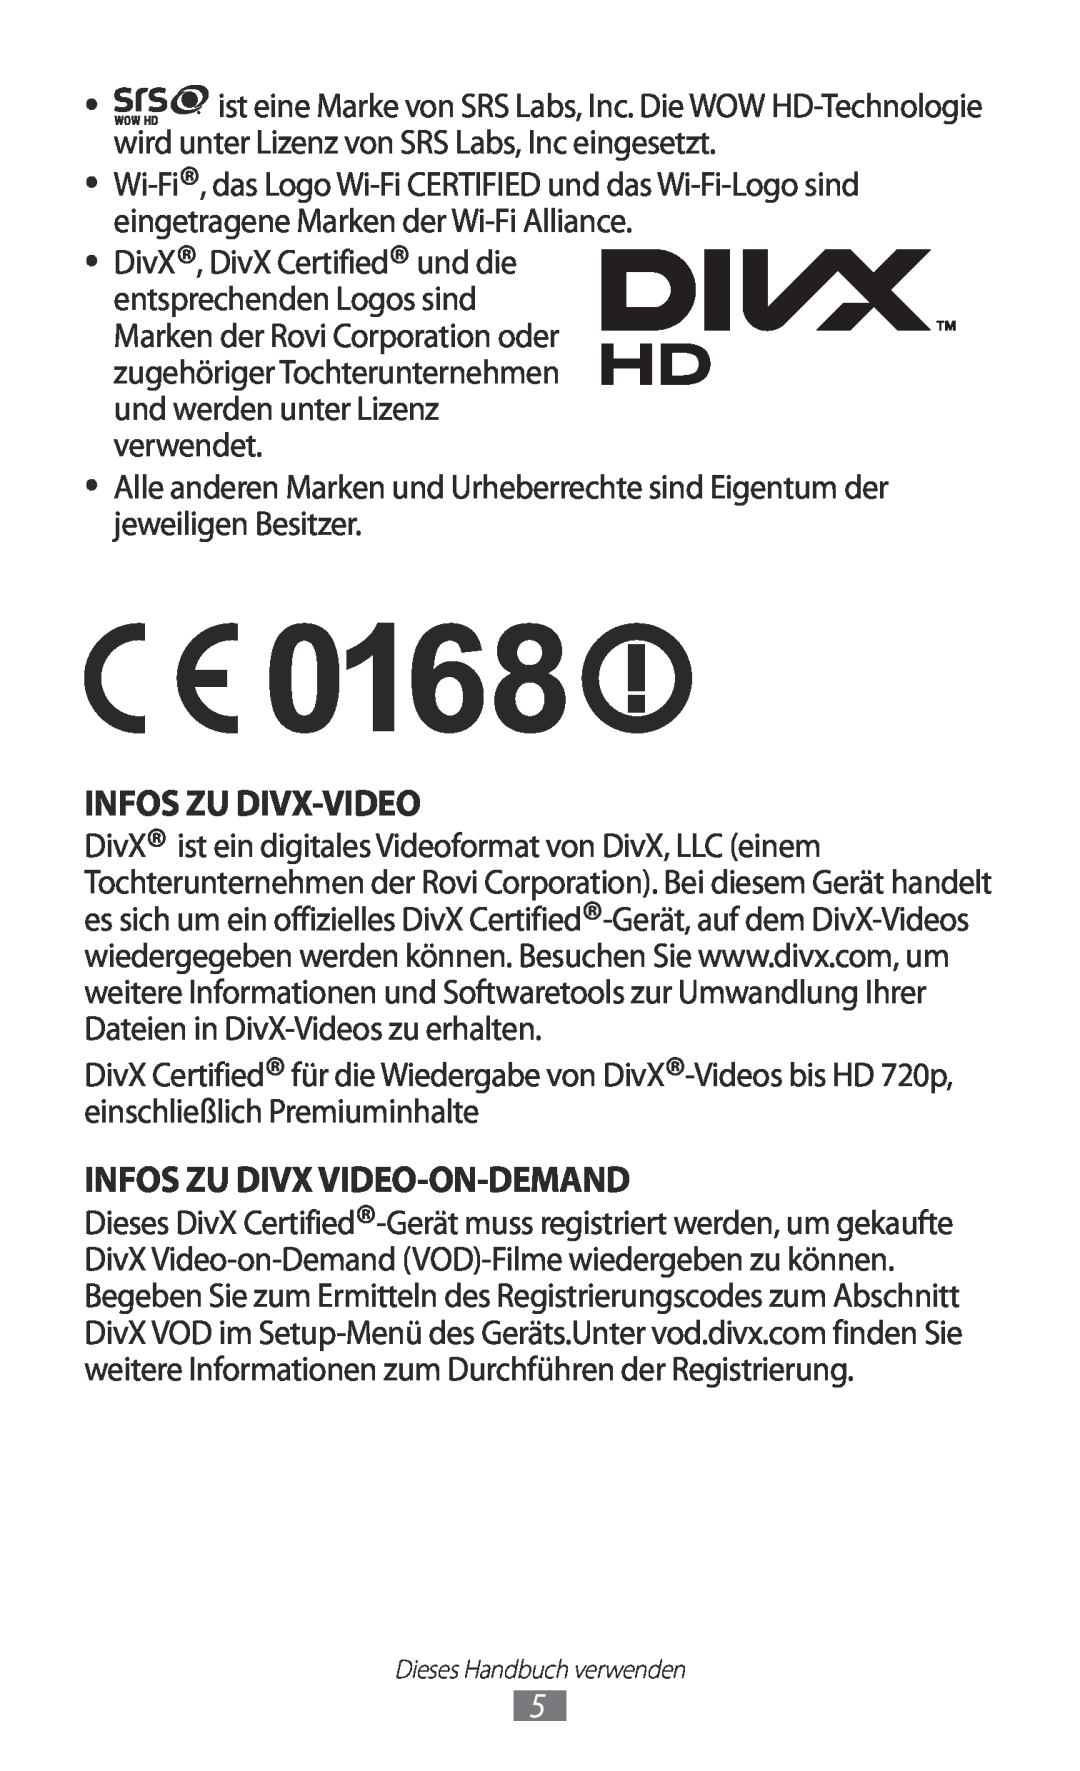 Samsung GT-P7501FKDDBT, GT-P7501UWEDBT, GT-P7501UWDVIA, GT-P7501FKDDTM Infos Zu Divx-Video, Infos Zu Divx Video-On-Demand 